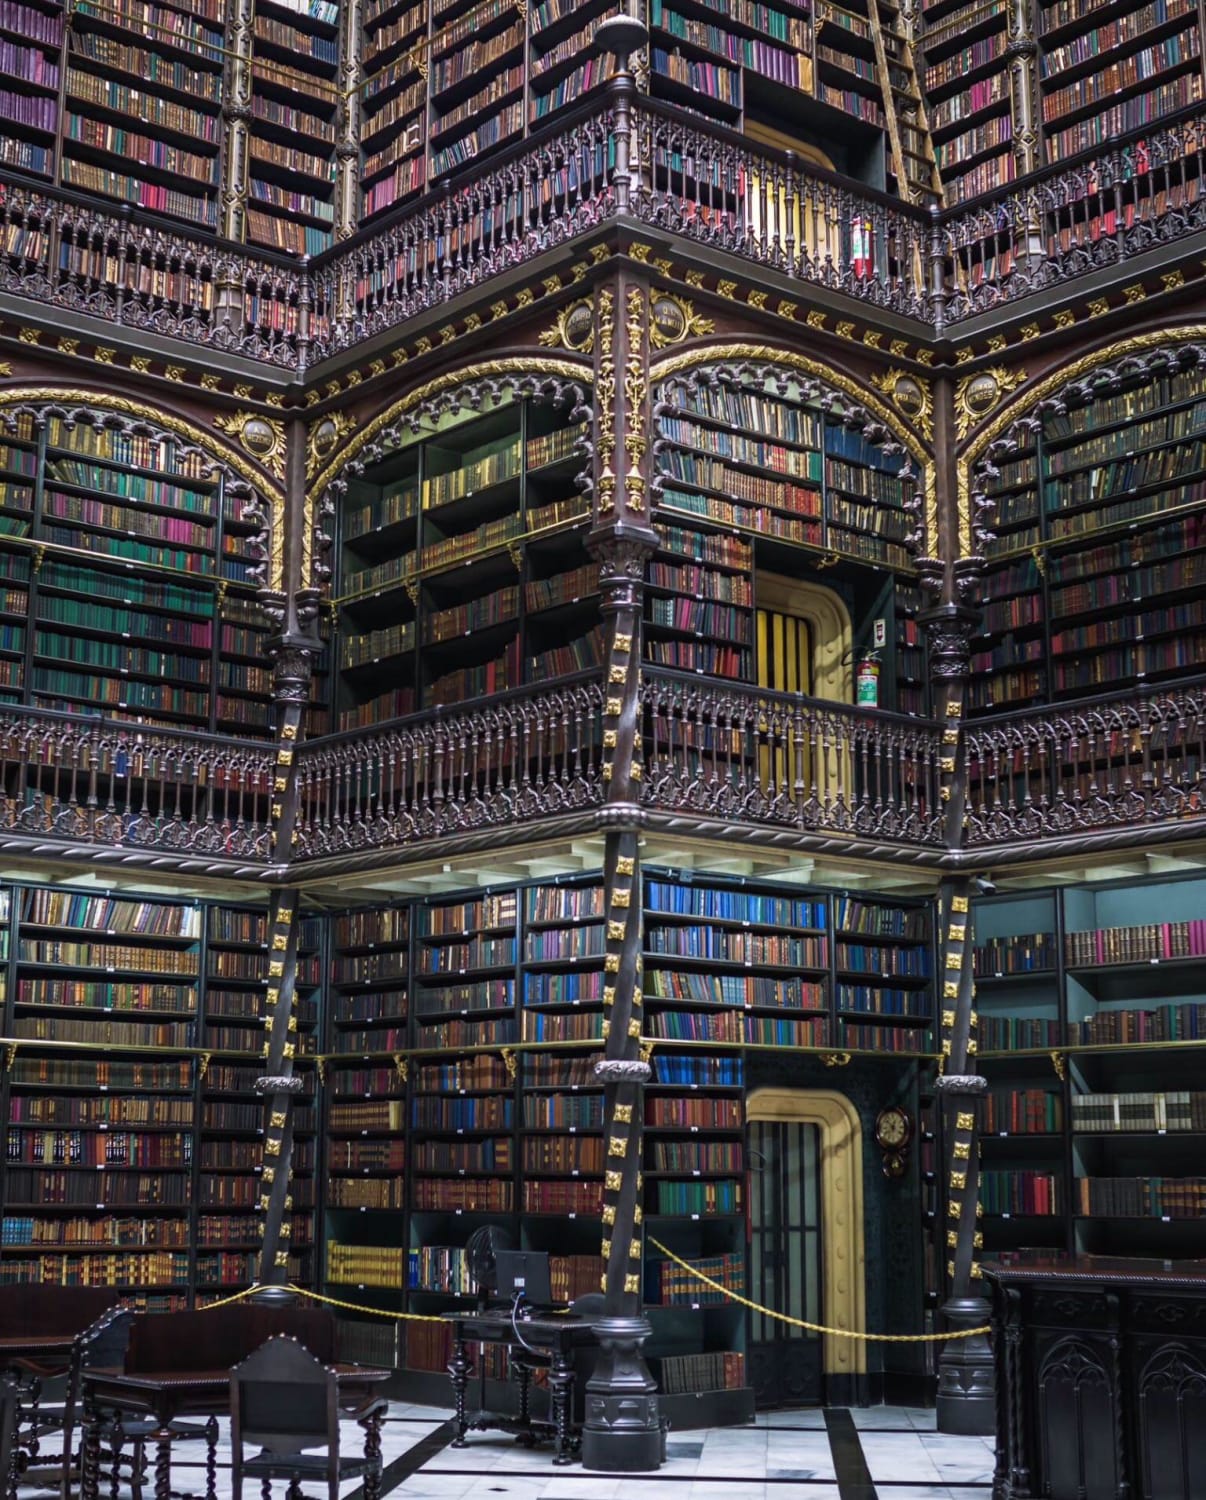 The royal Portuguese reading room in Brazil